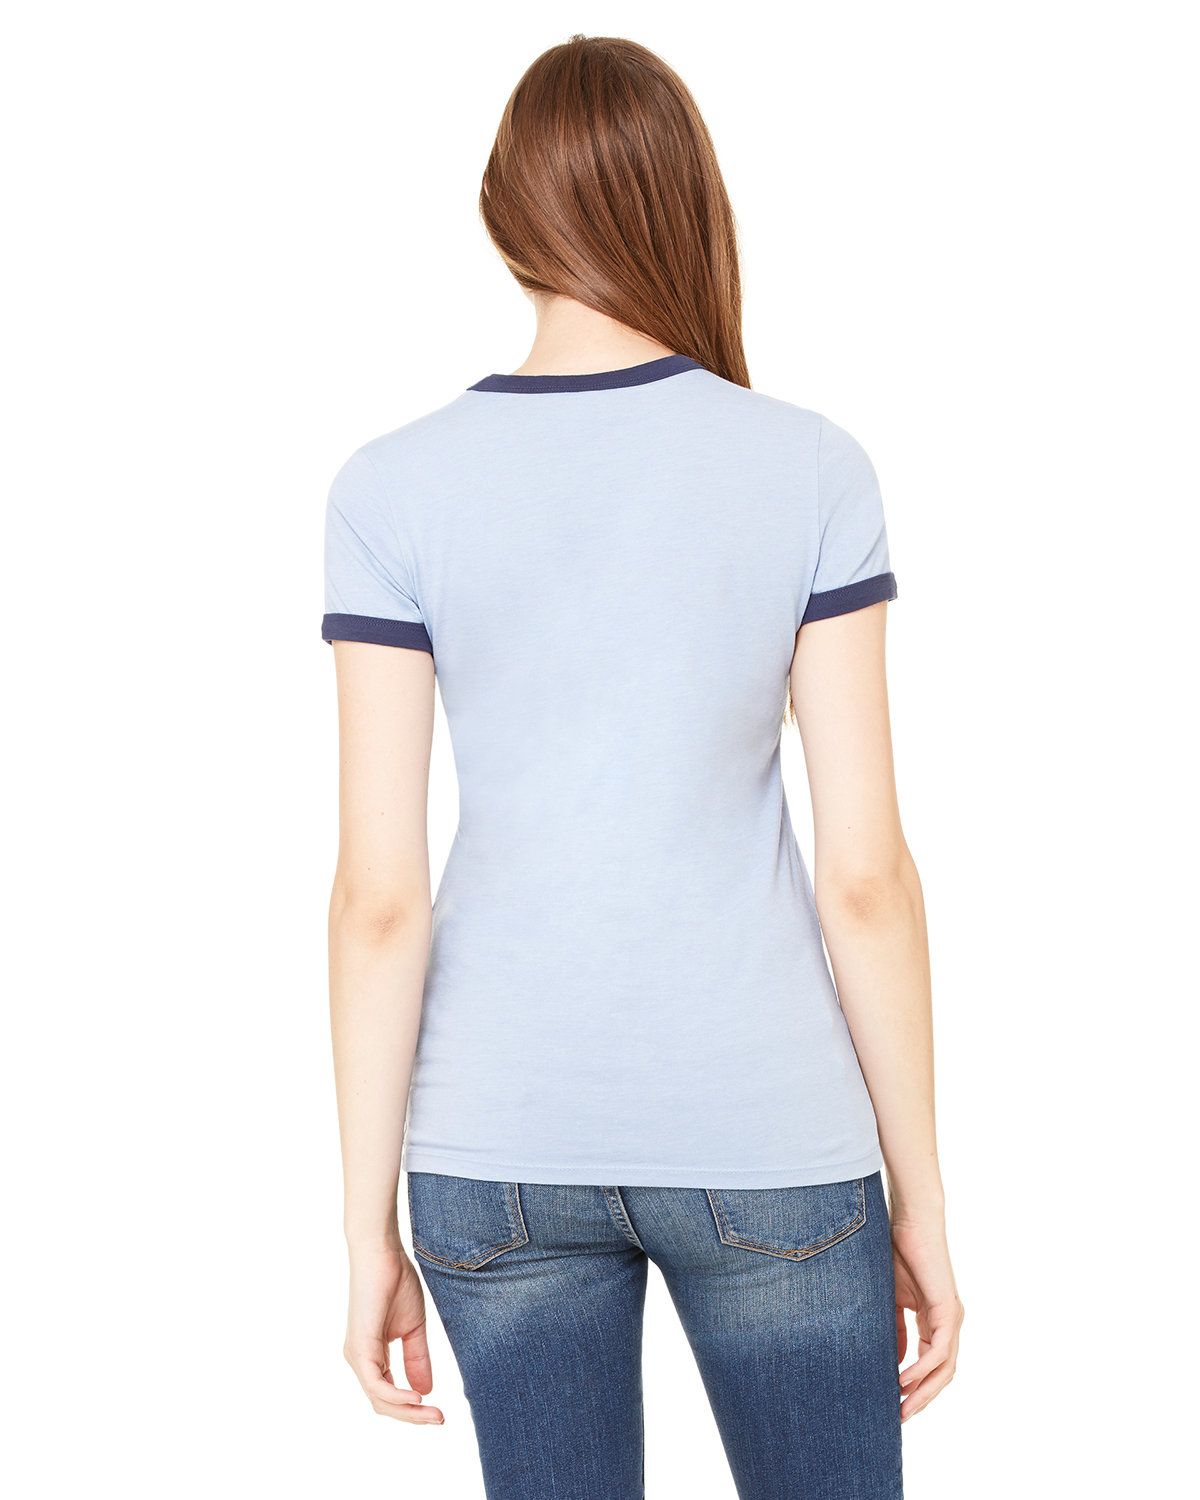 'Bella Canvas B6050 Ladies' Jersey Short Sleeve Ringer T Shirt'